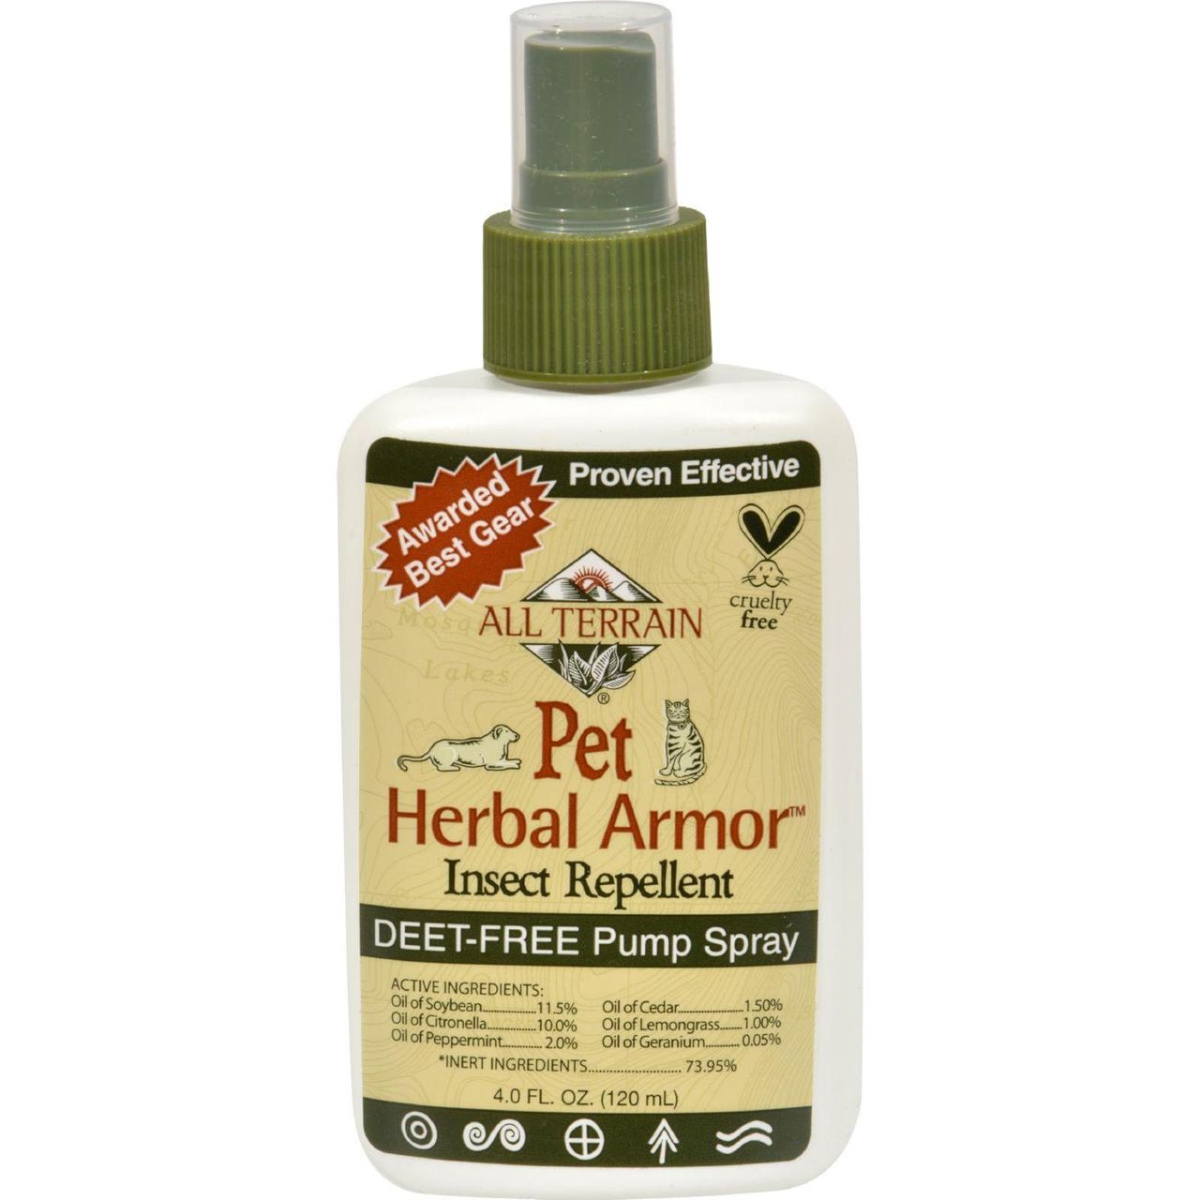 Hg0762013 4 Fl Oz Pet Herbal Armor Insect Repellent